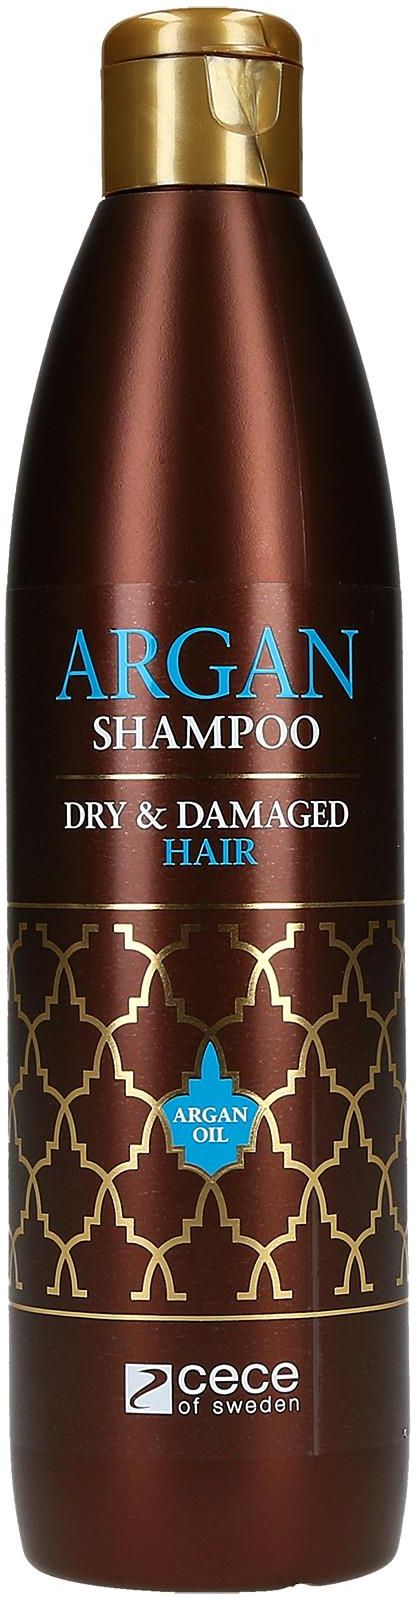 argan szampon cece